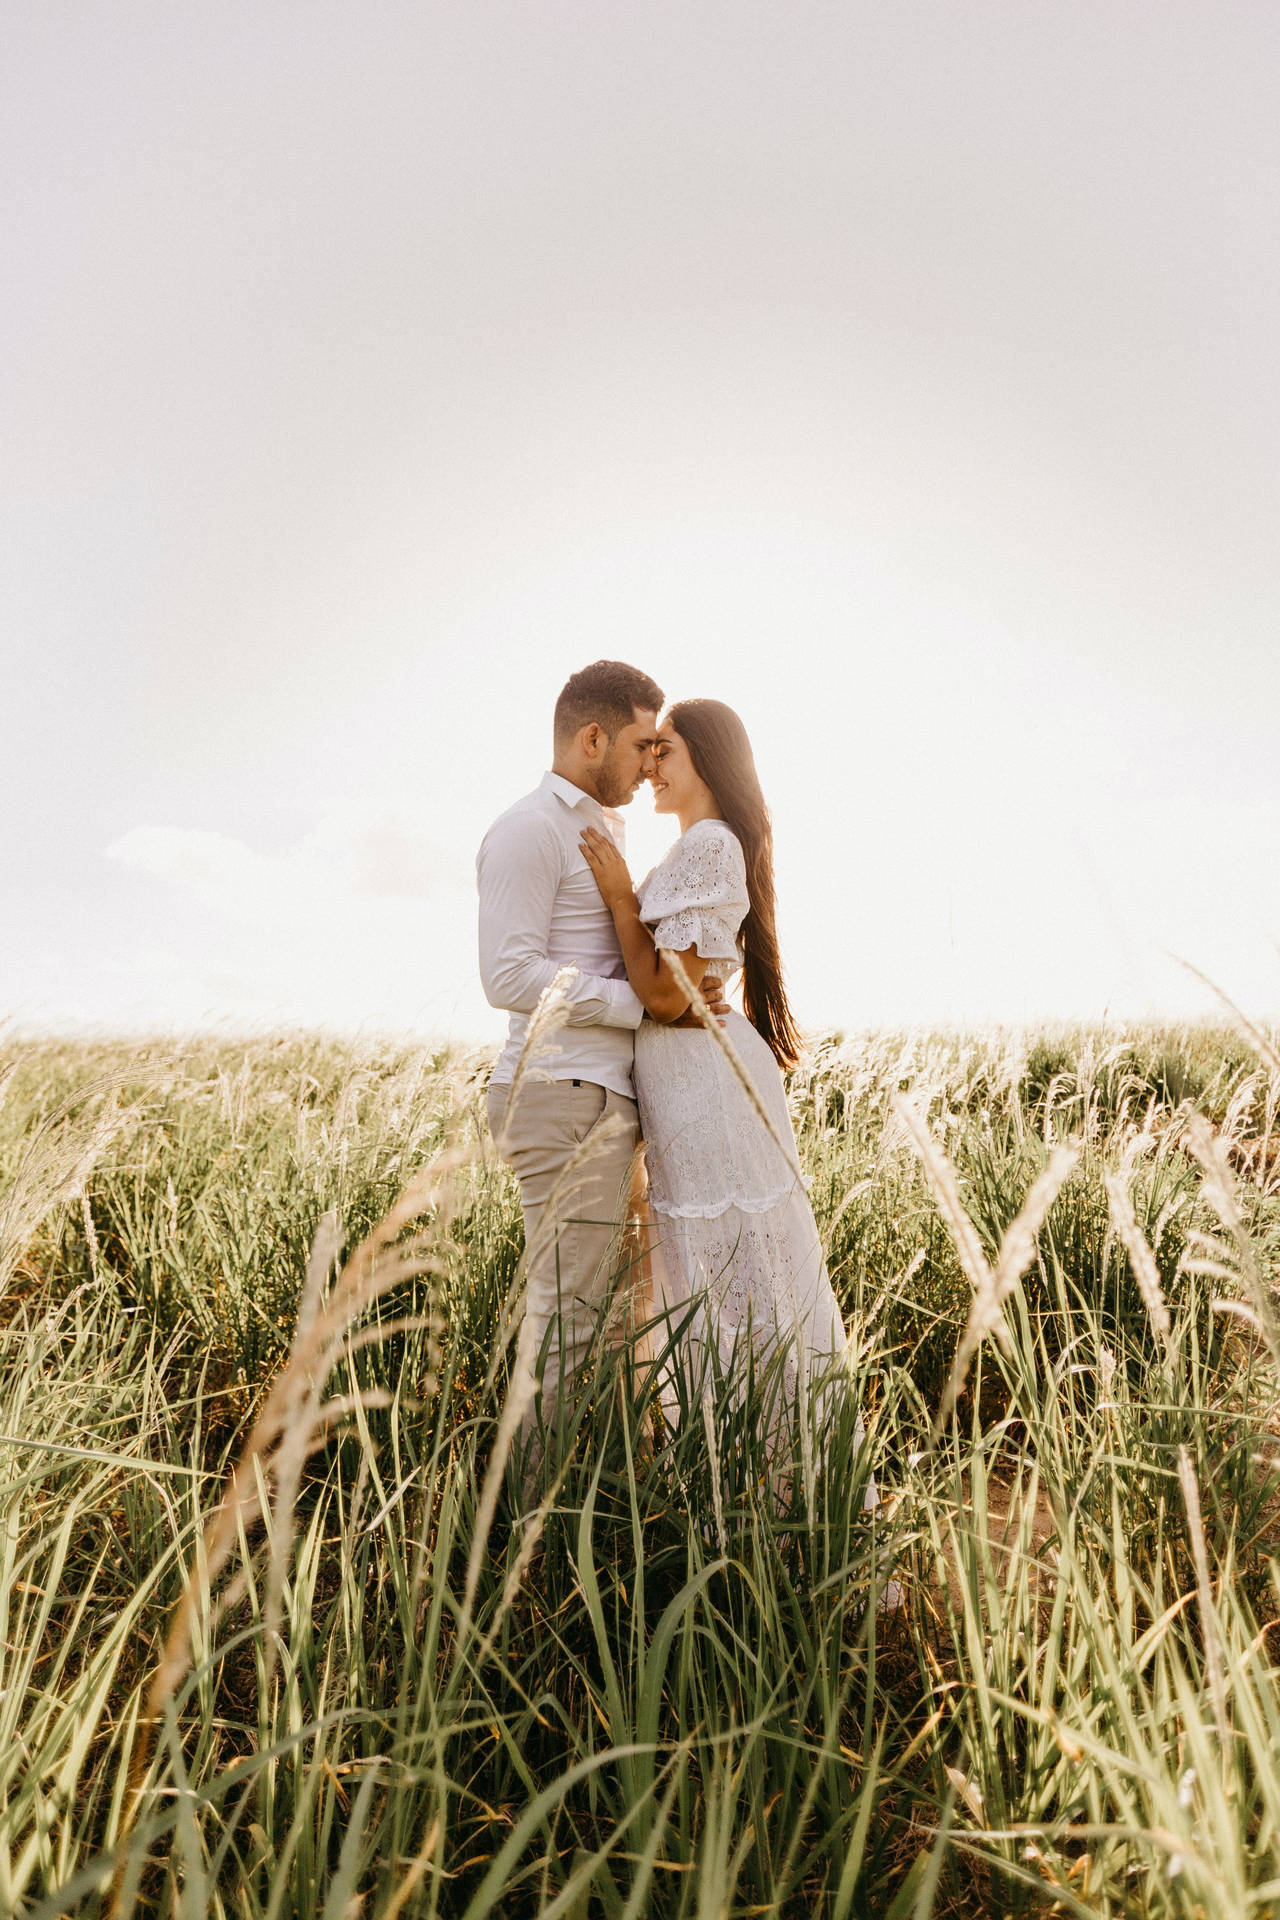 Romantic Couple On Grass Field Background